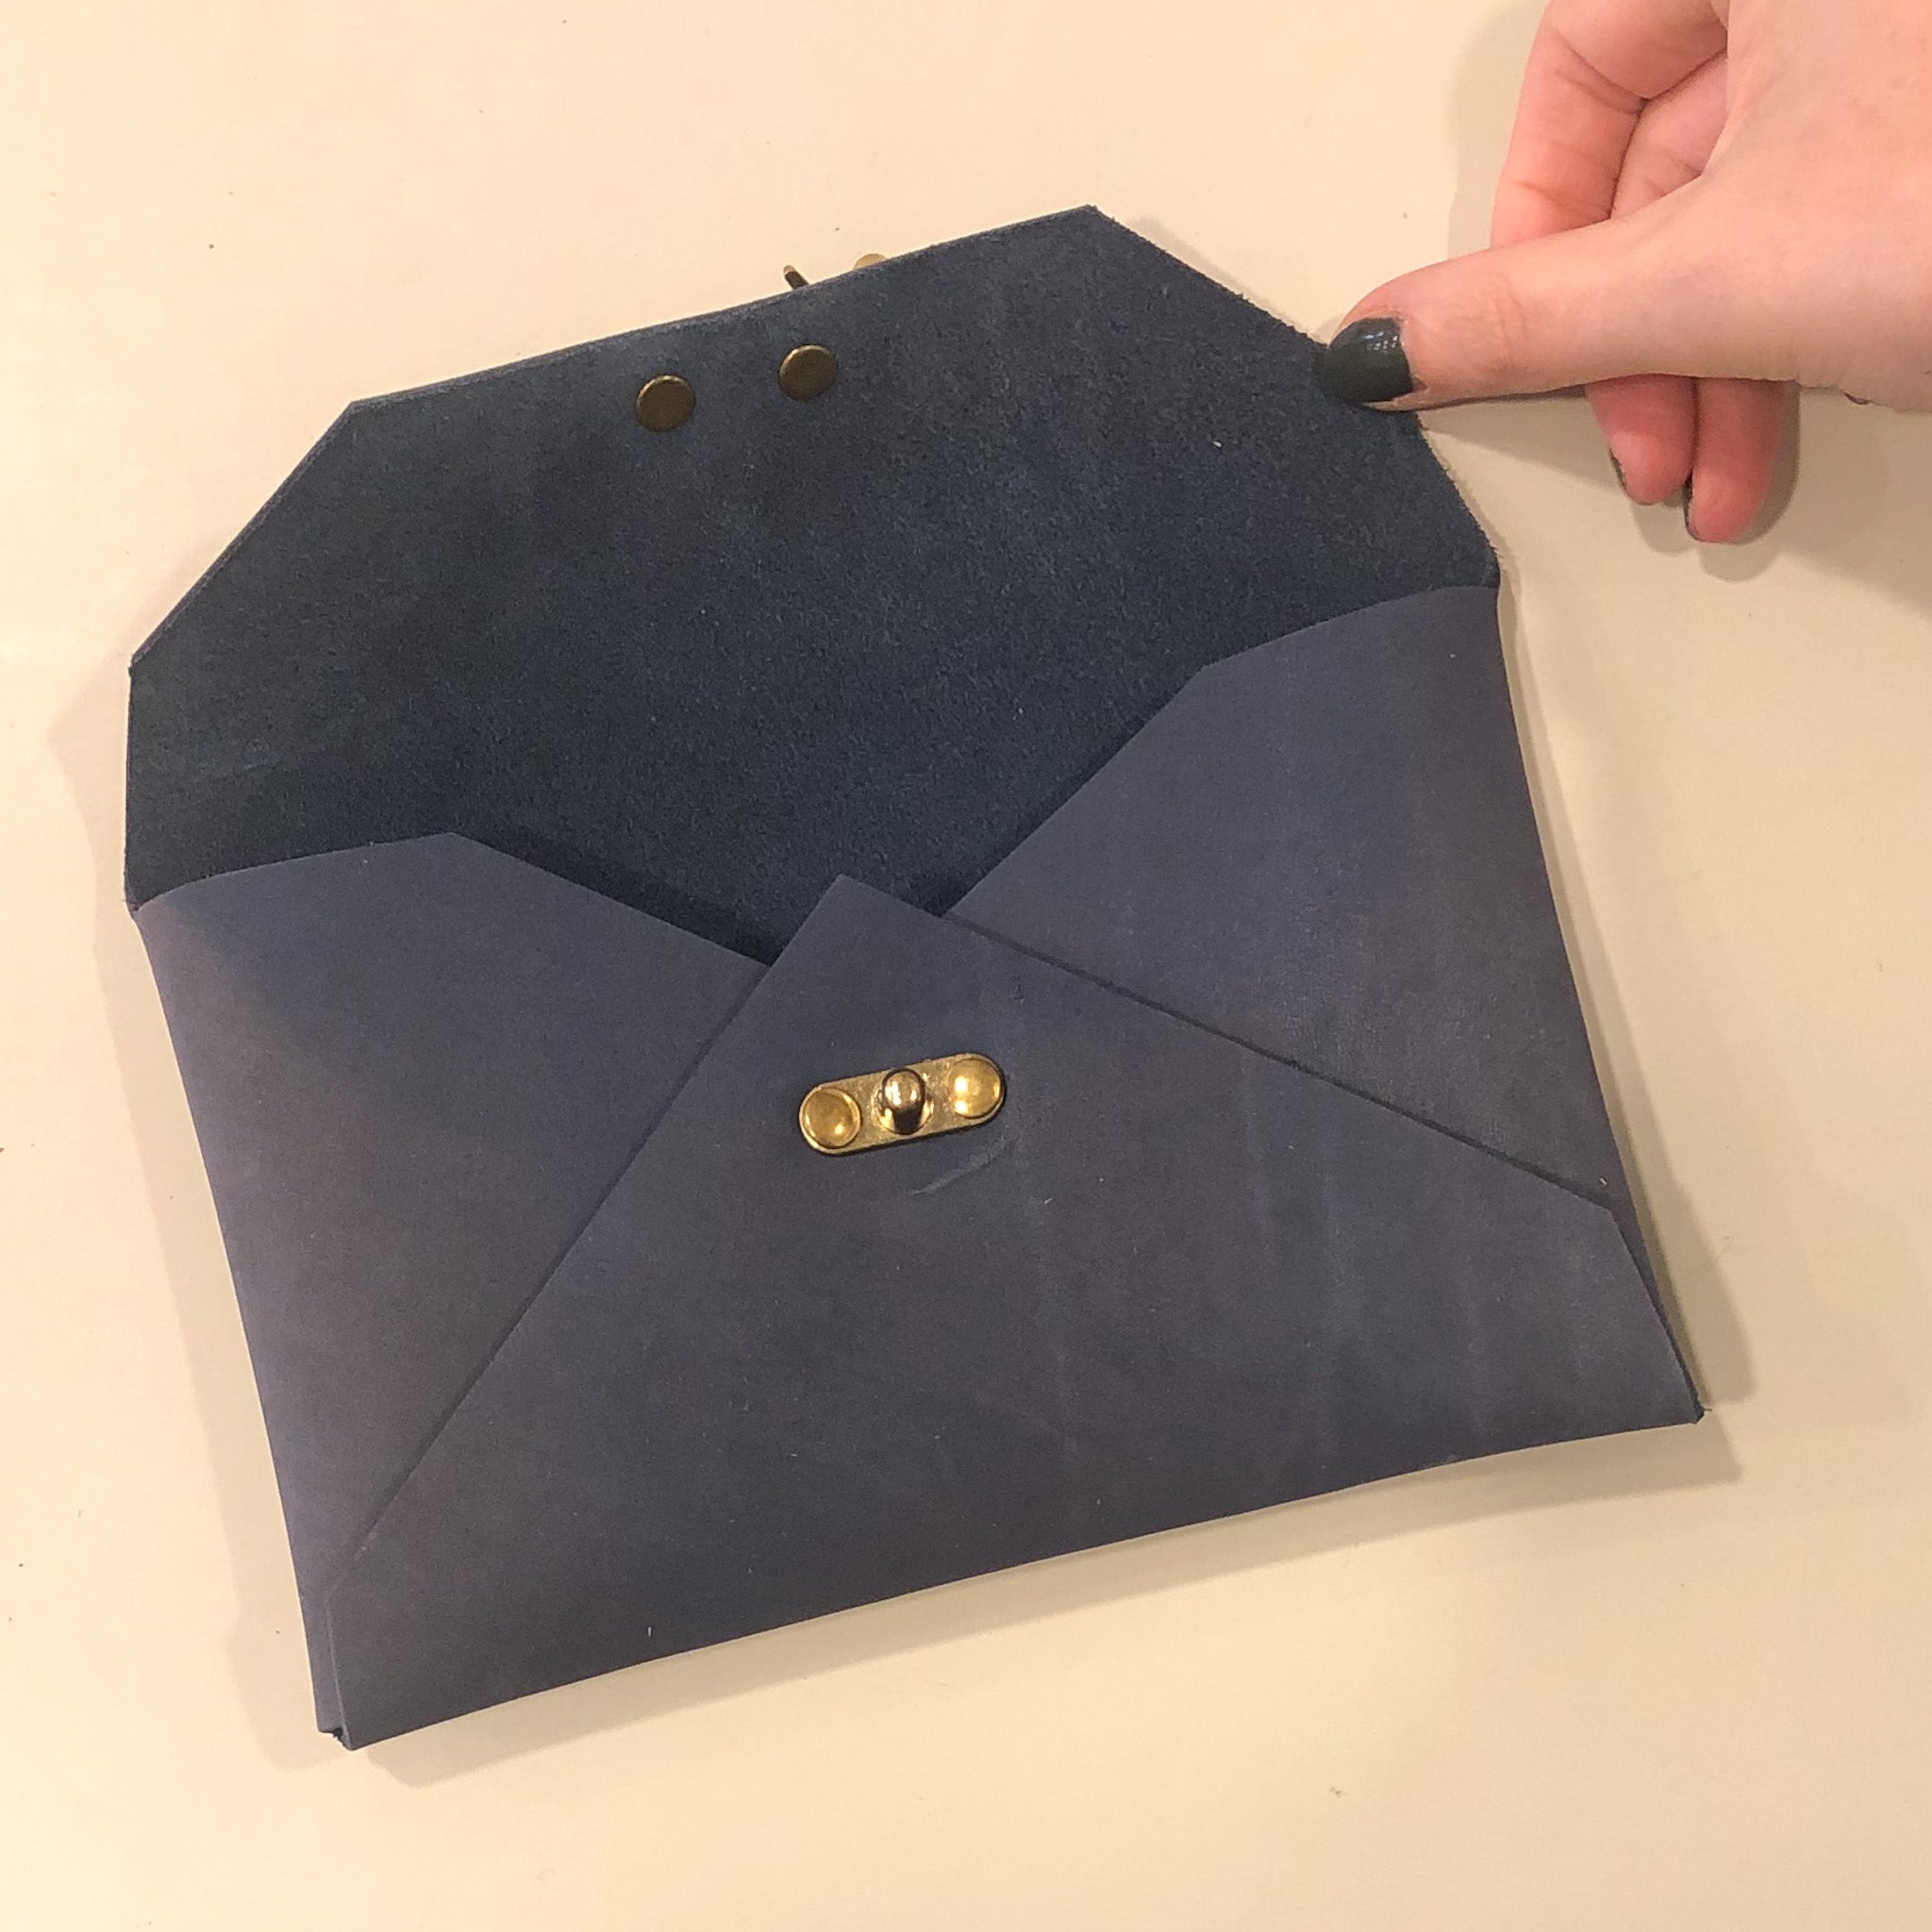 Classic Envelope Clutch – Alice Yardley Maine